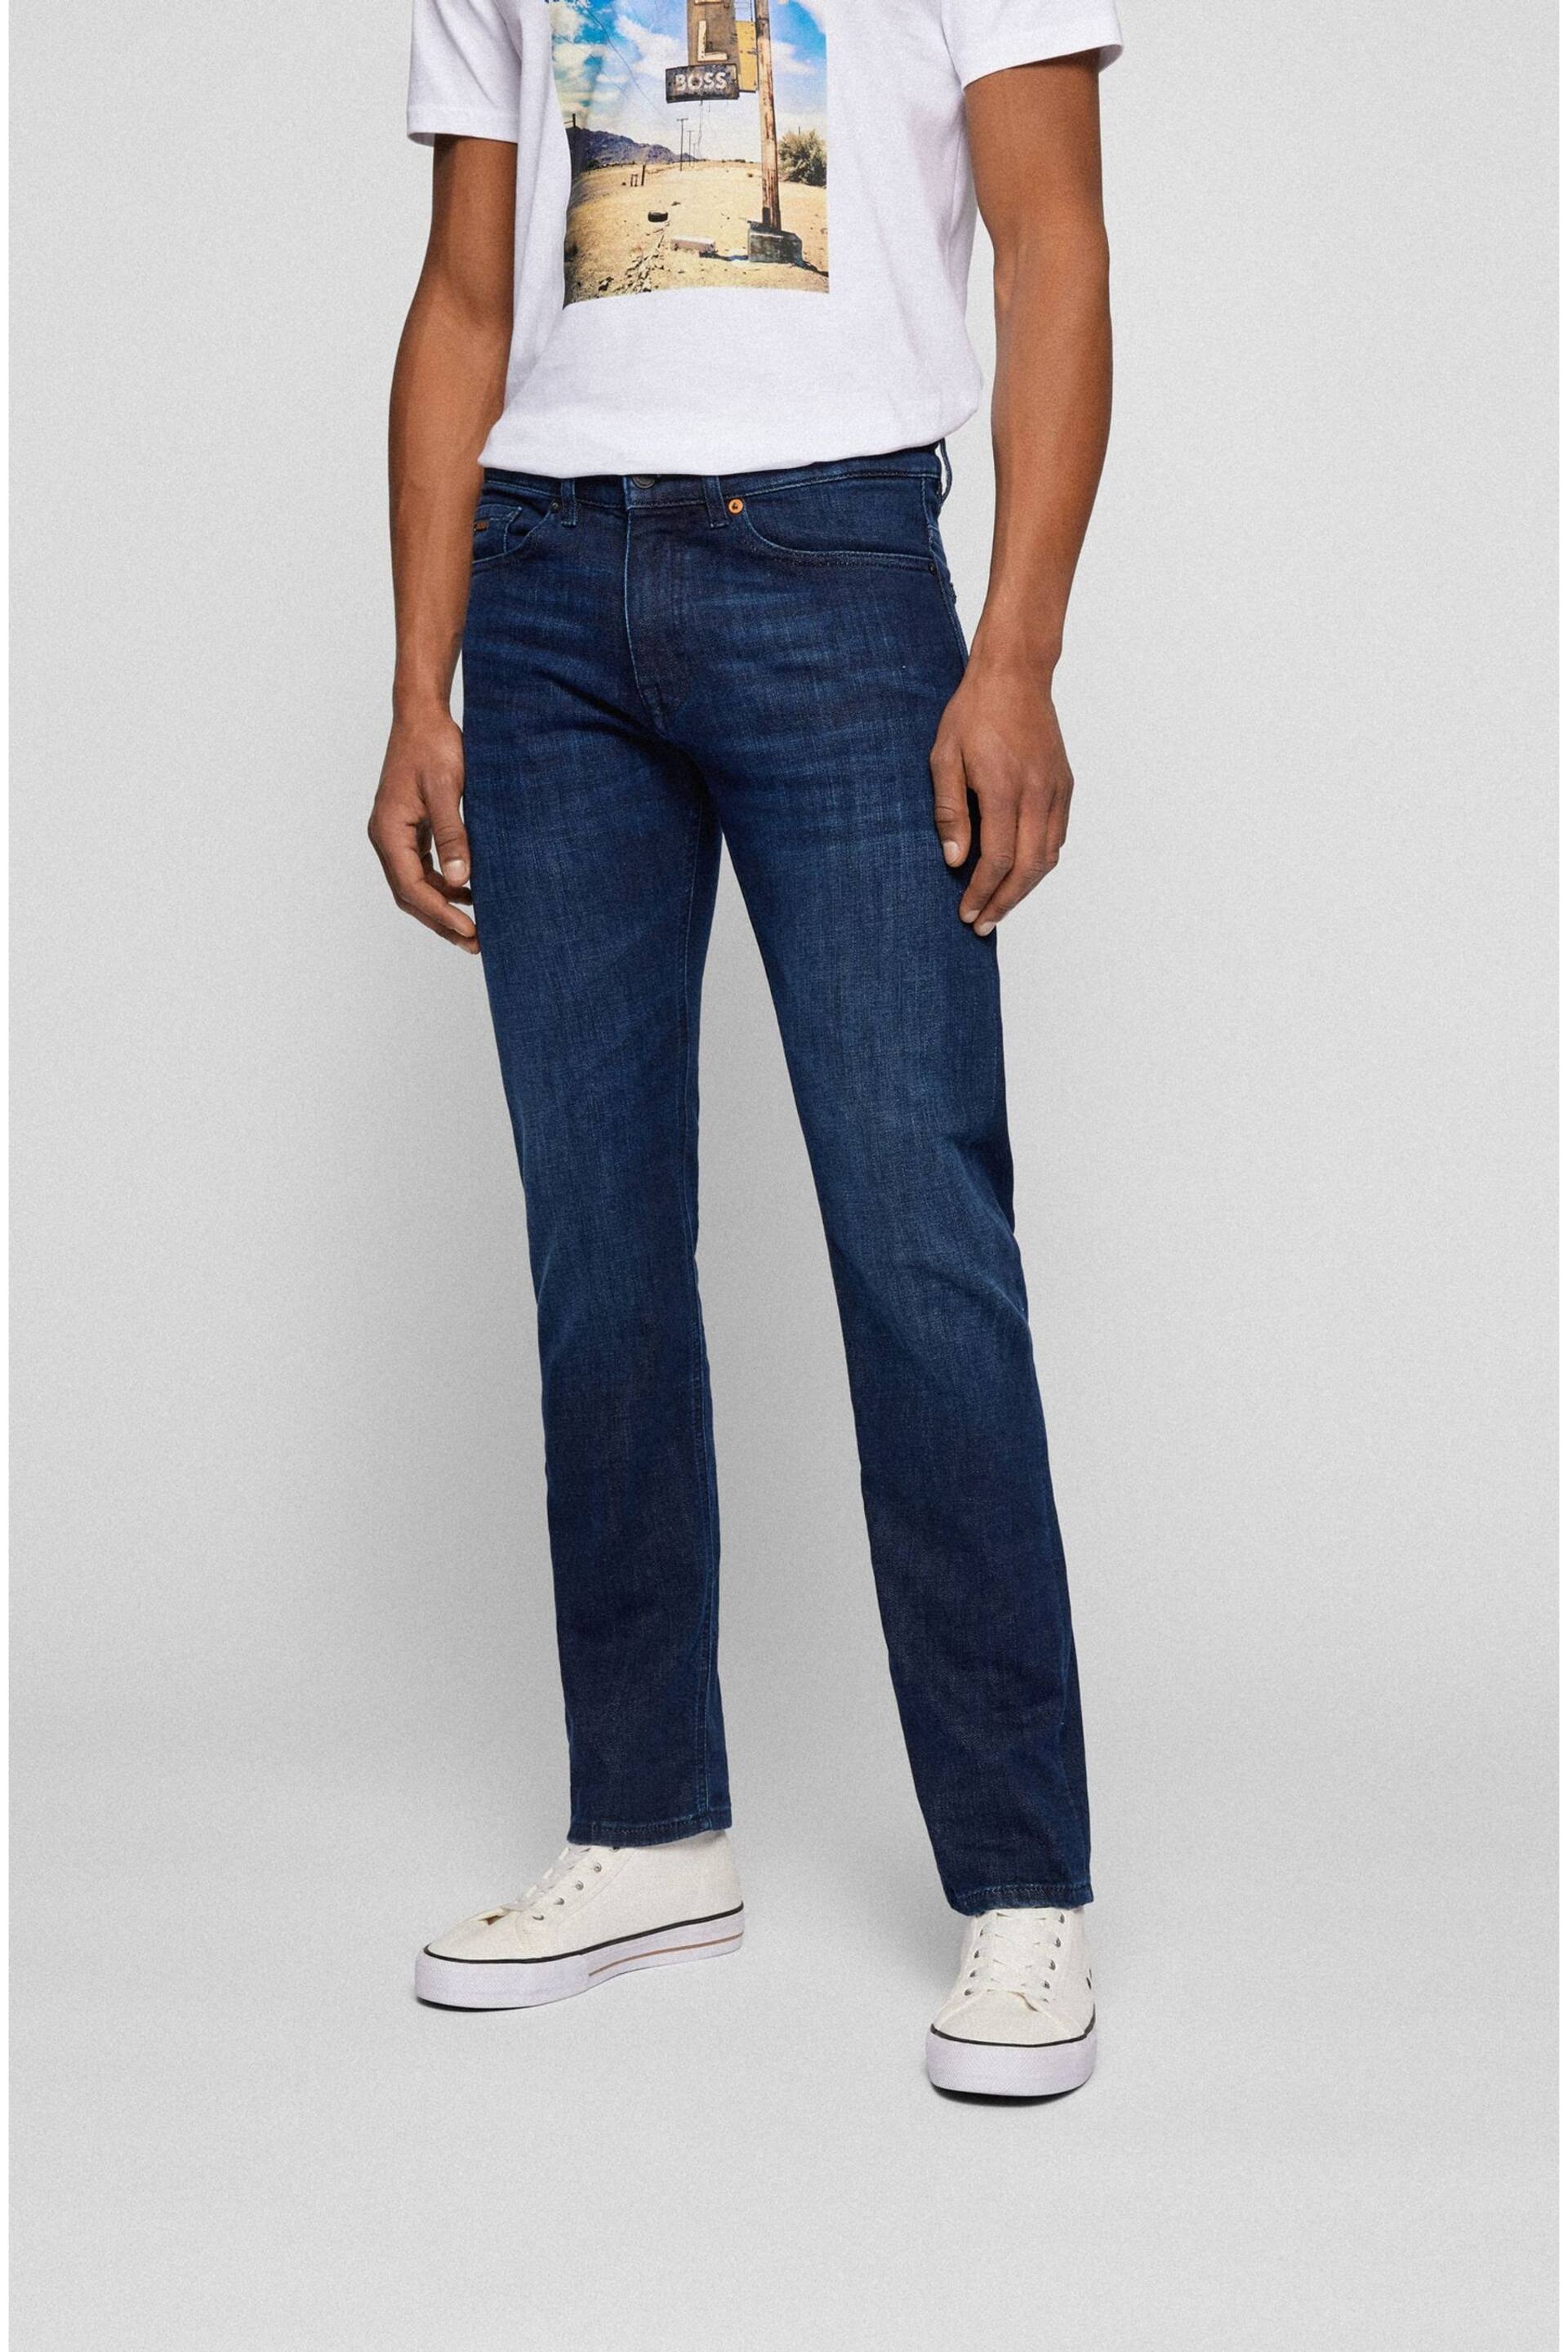 BOSS Dark Blue Slim Fit Comfort Stretch Denim Jeans - Image 1 of 5